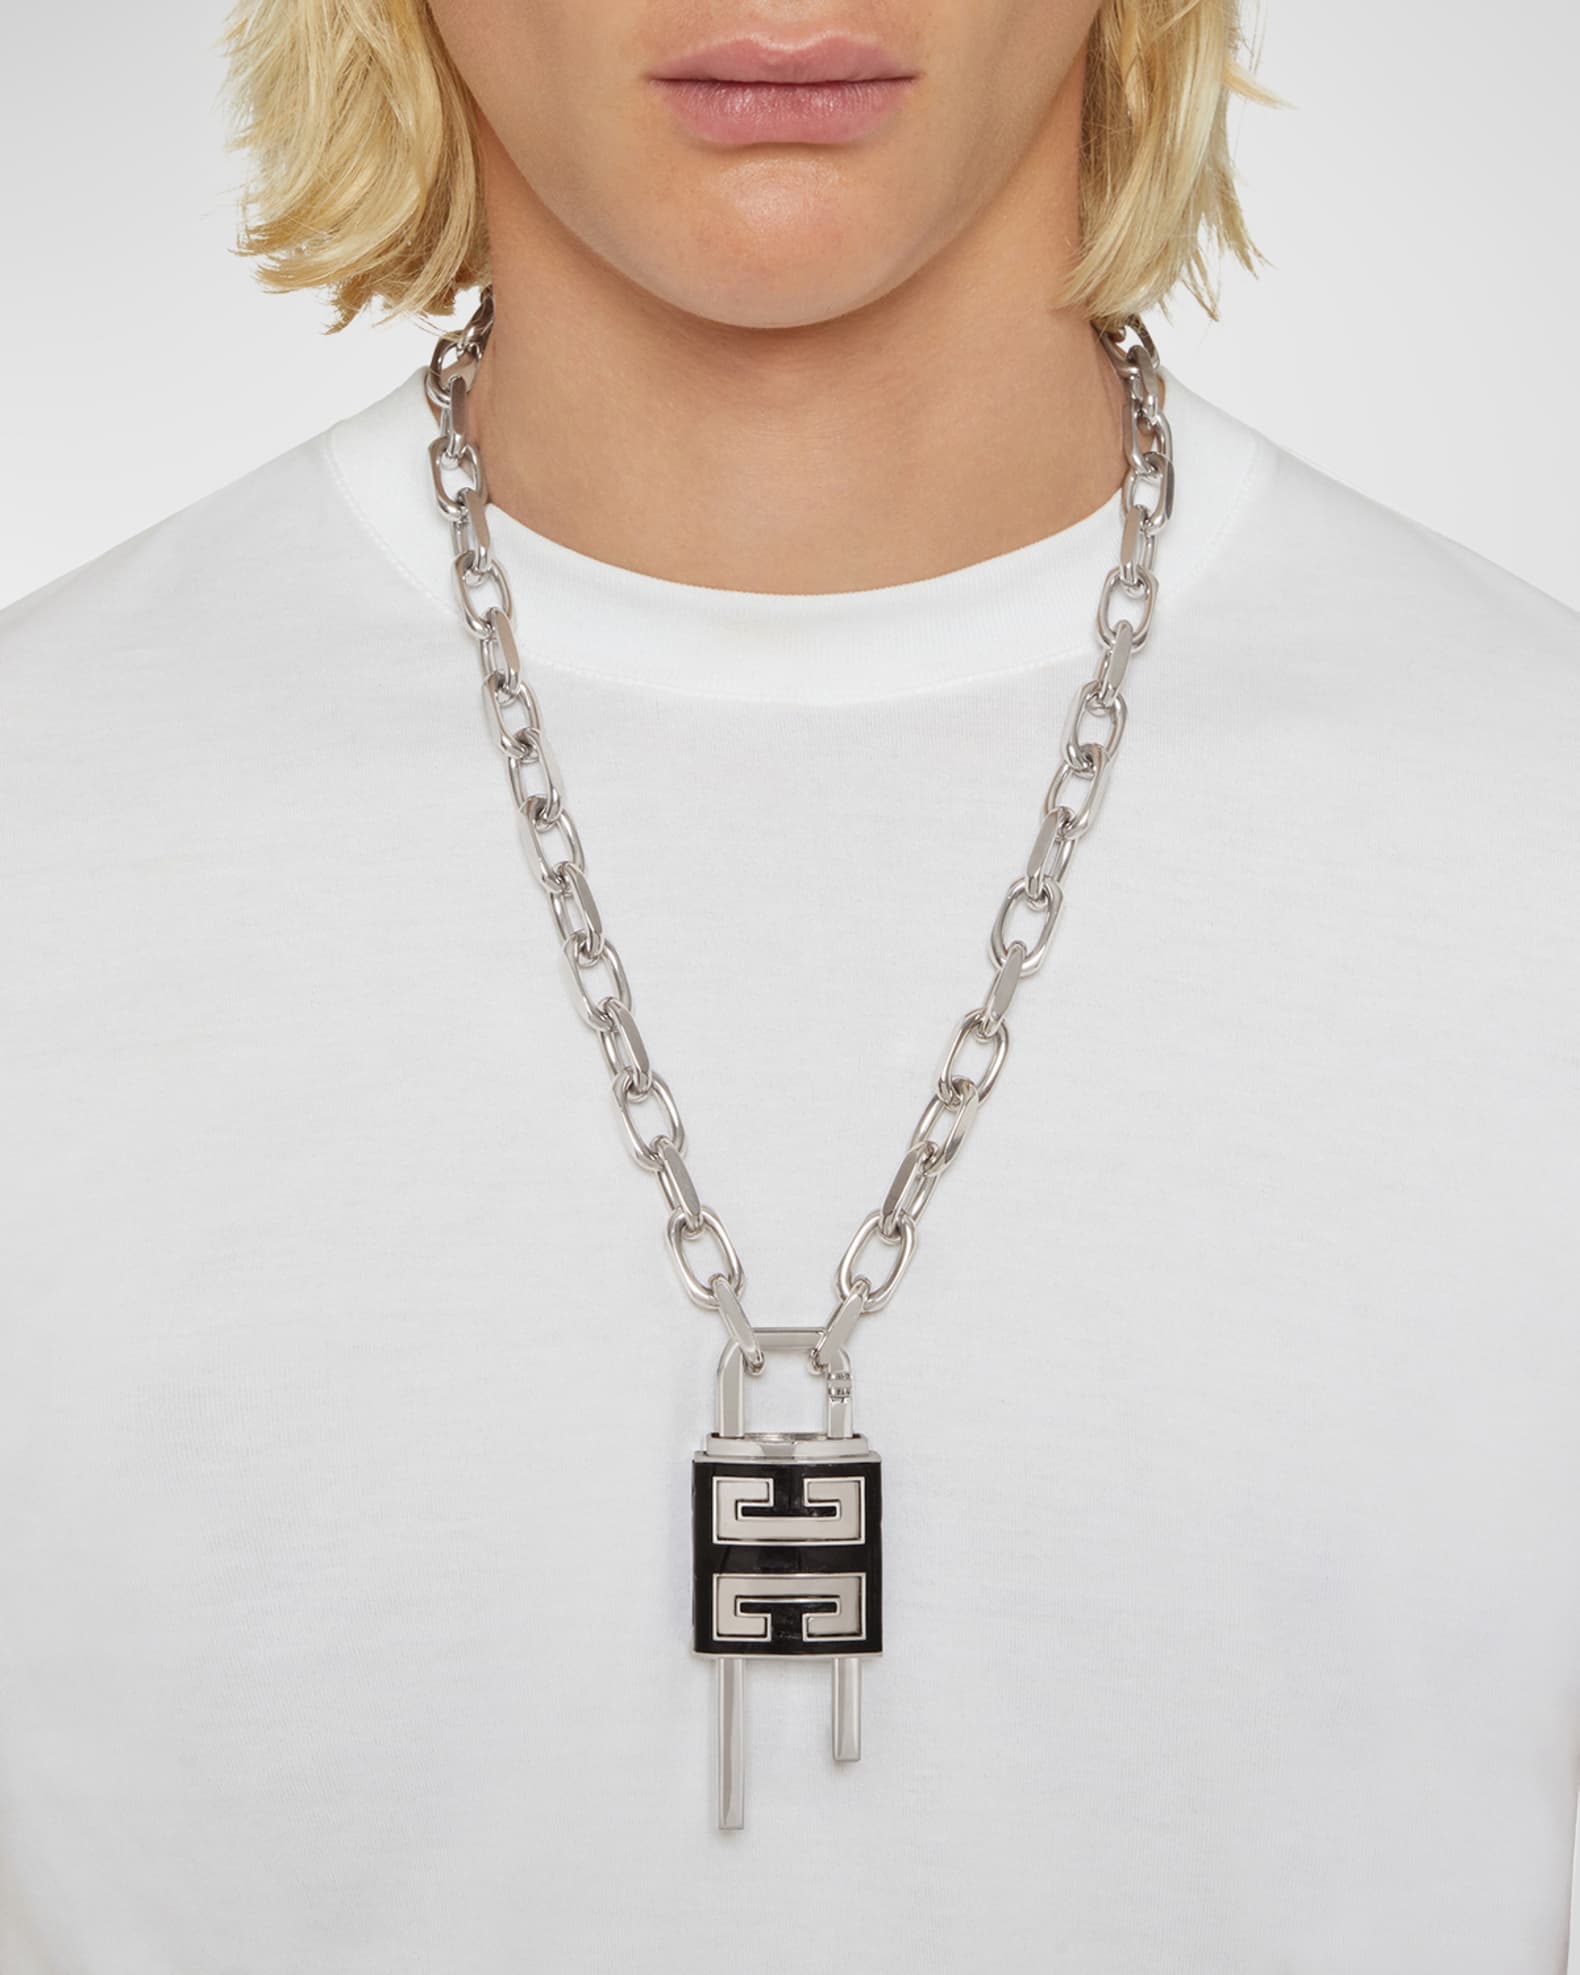 Balenciaga Lock Chain Necklace in Metallic